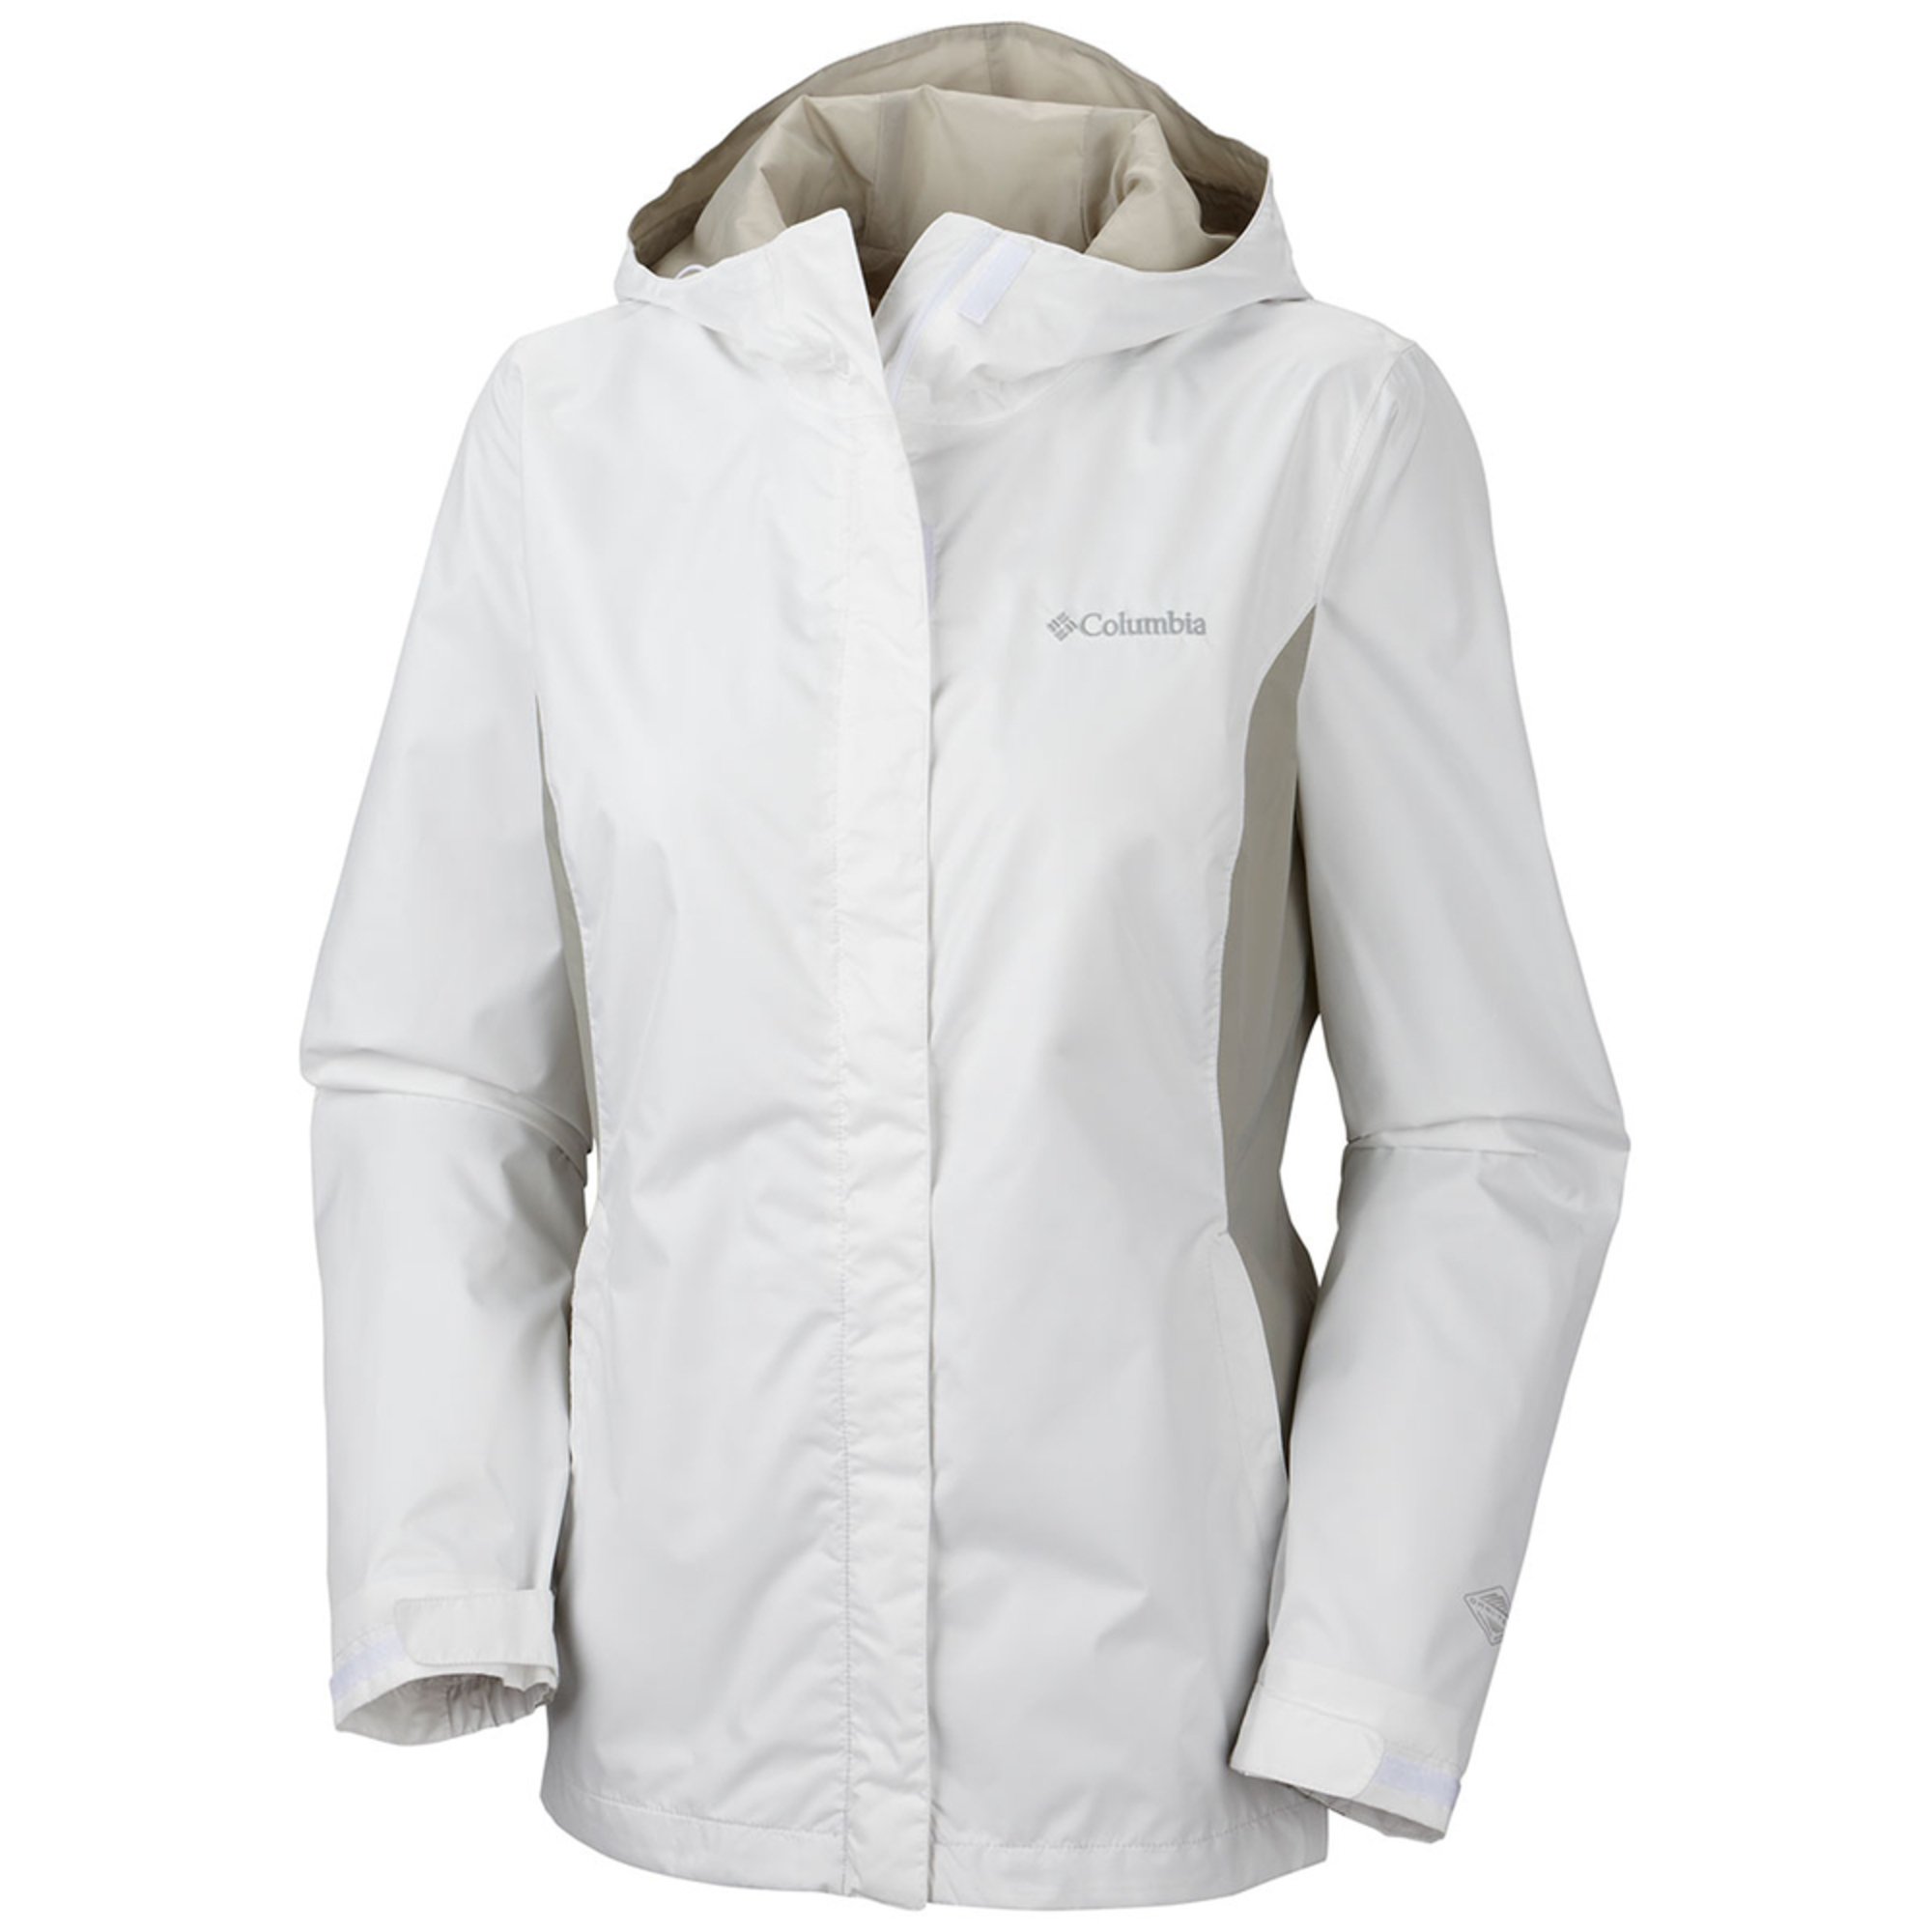 columbia waterproof breathable jacket